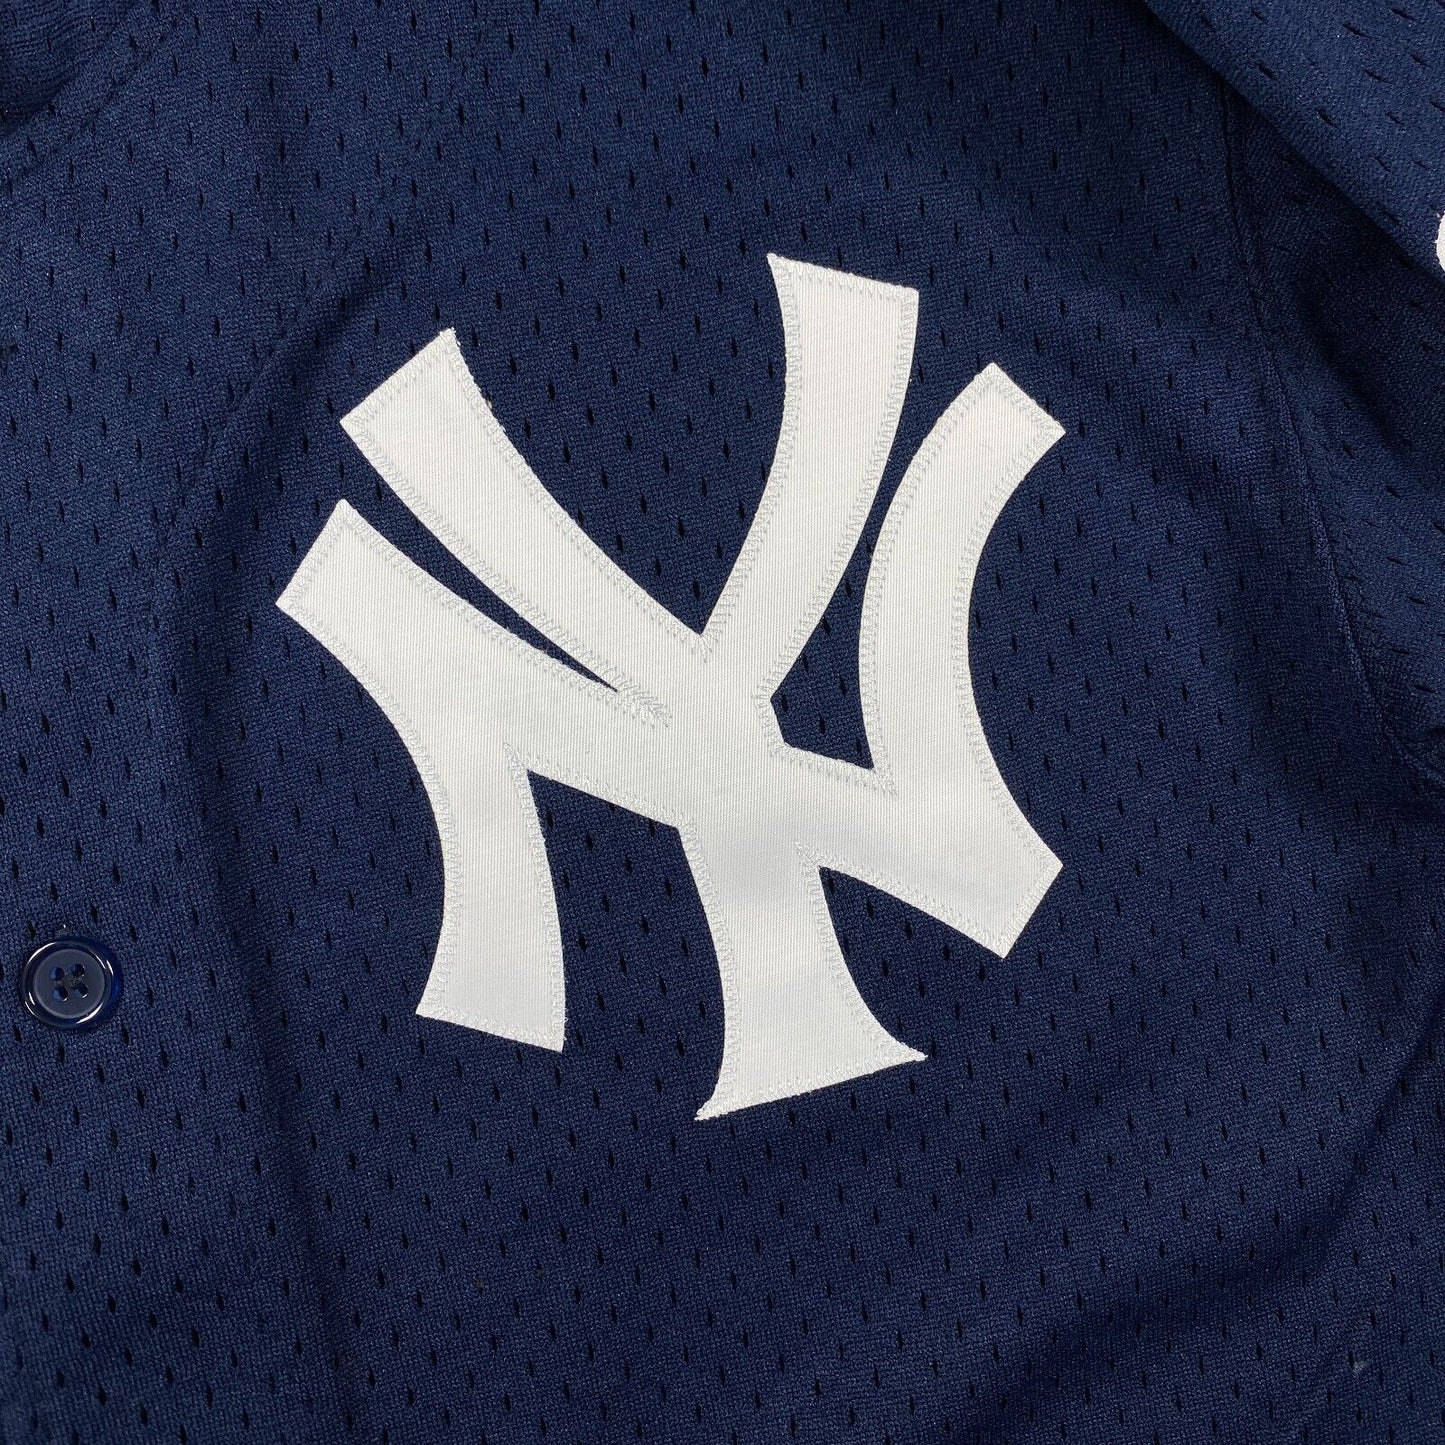 100% Authentic Mariano Rivera Mitchell & Ness NY Yankees BP Jersey Size M 40